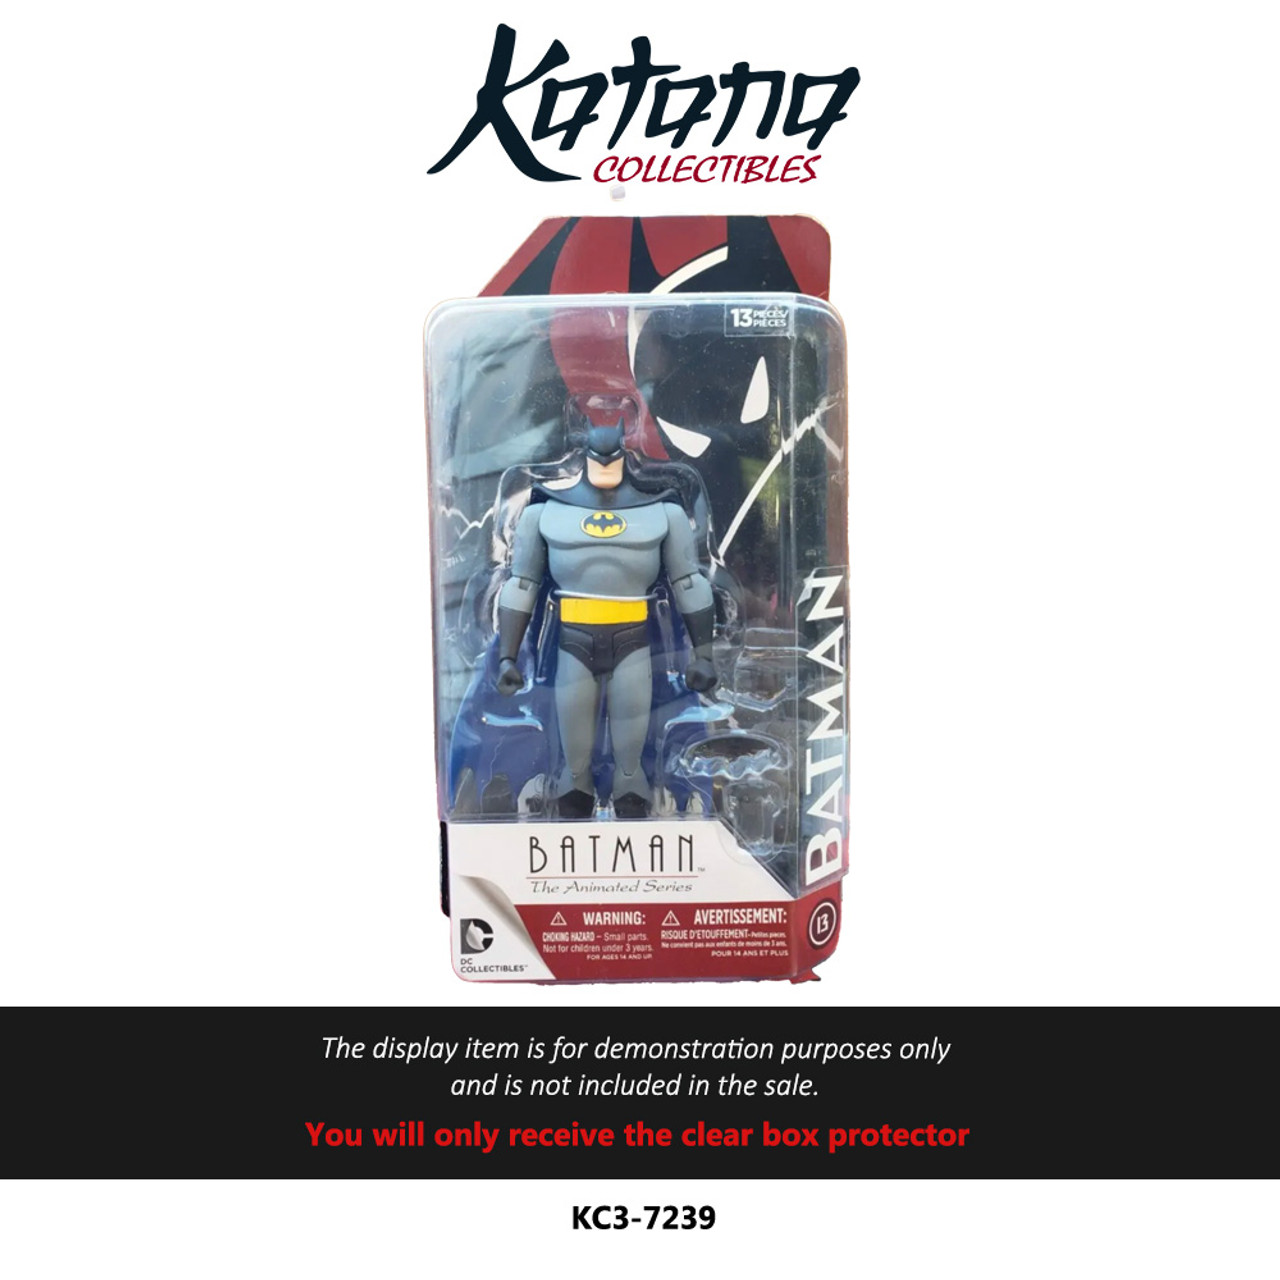 Katana Collectibles Protector For DC Collectibles Batman Animated Series Batman Figure